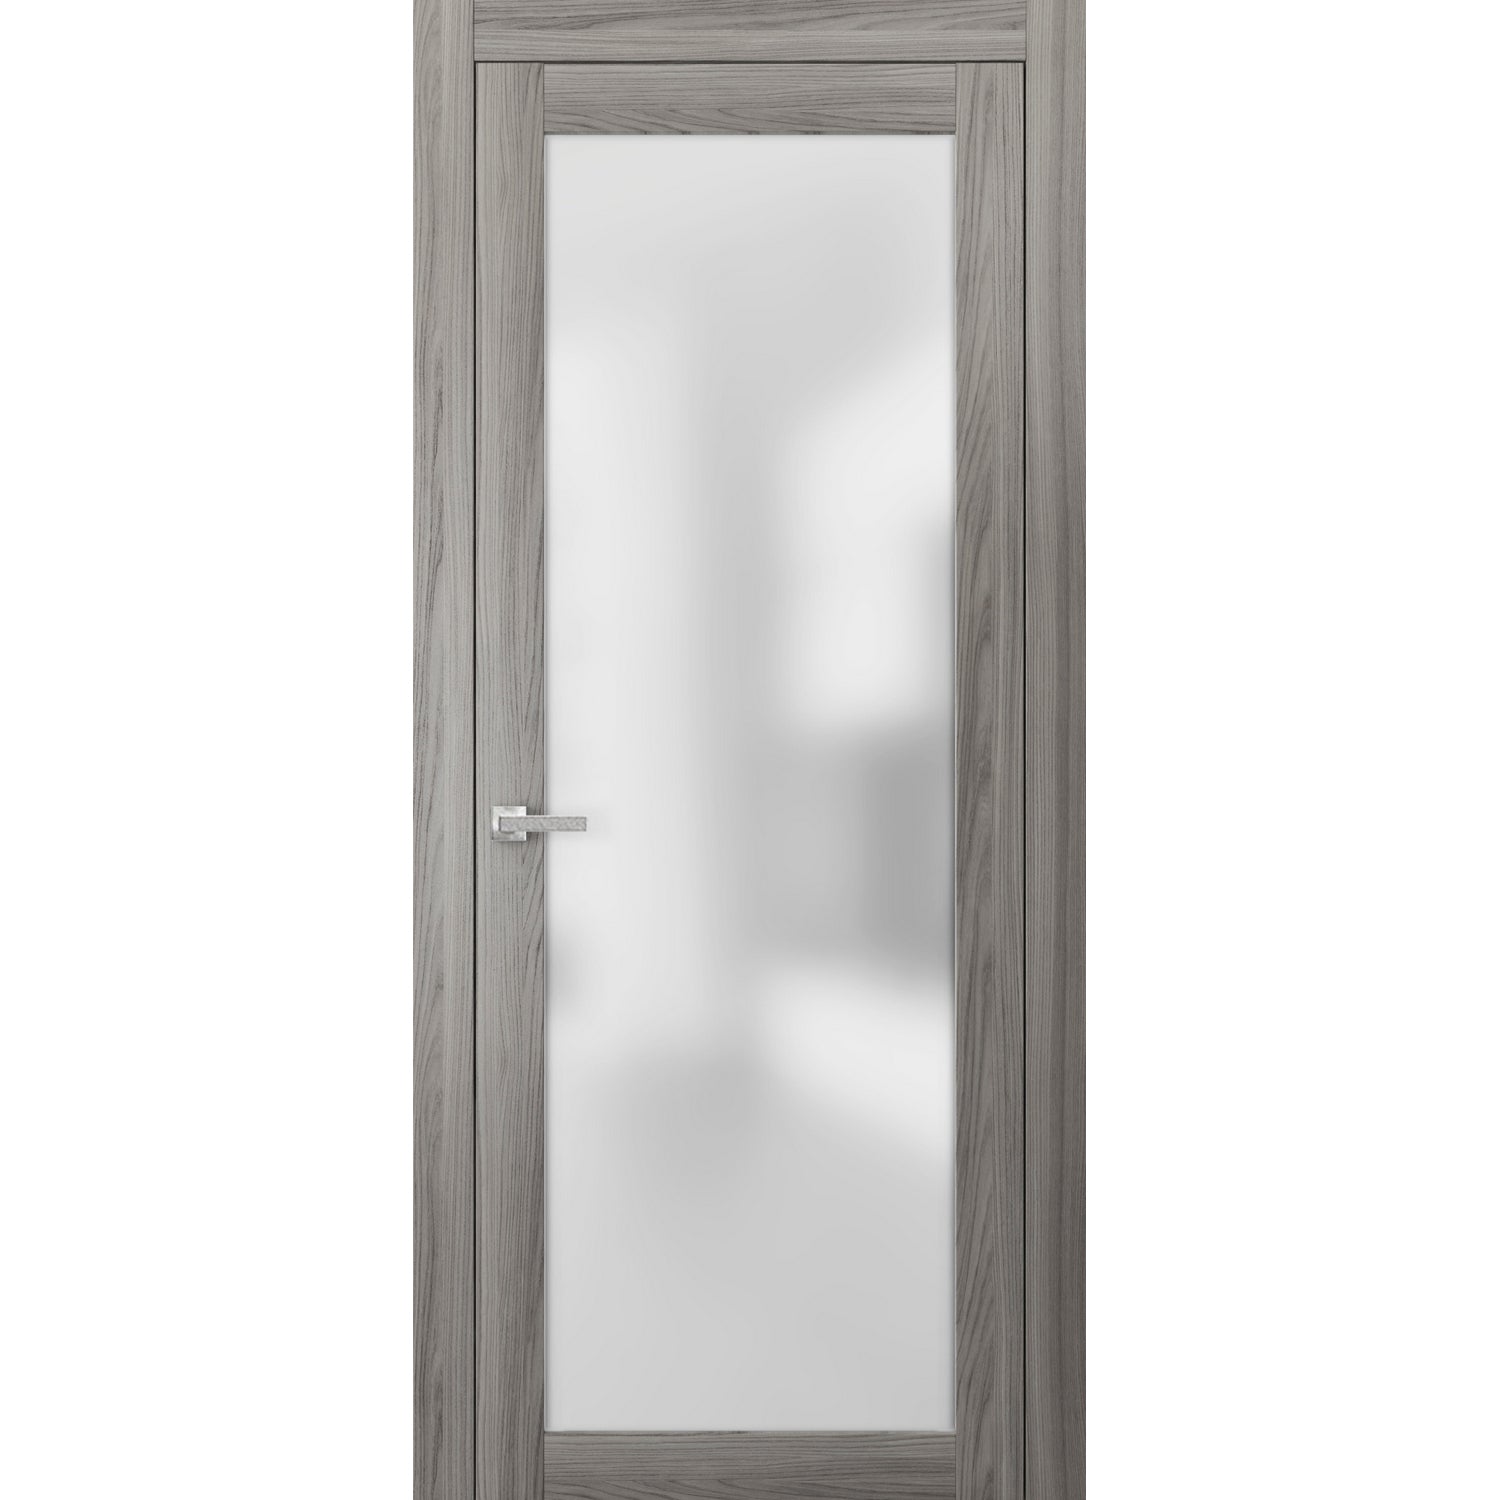 SARTODOORS Lite Frosted Glass Door 42 x 80 | Planum 2102 Ginger Ash | Frames Satin Nickel Hardware | Panel Pre-hung